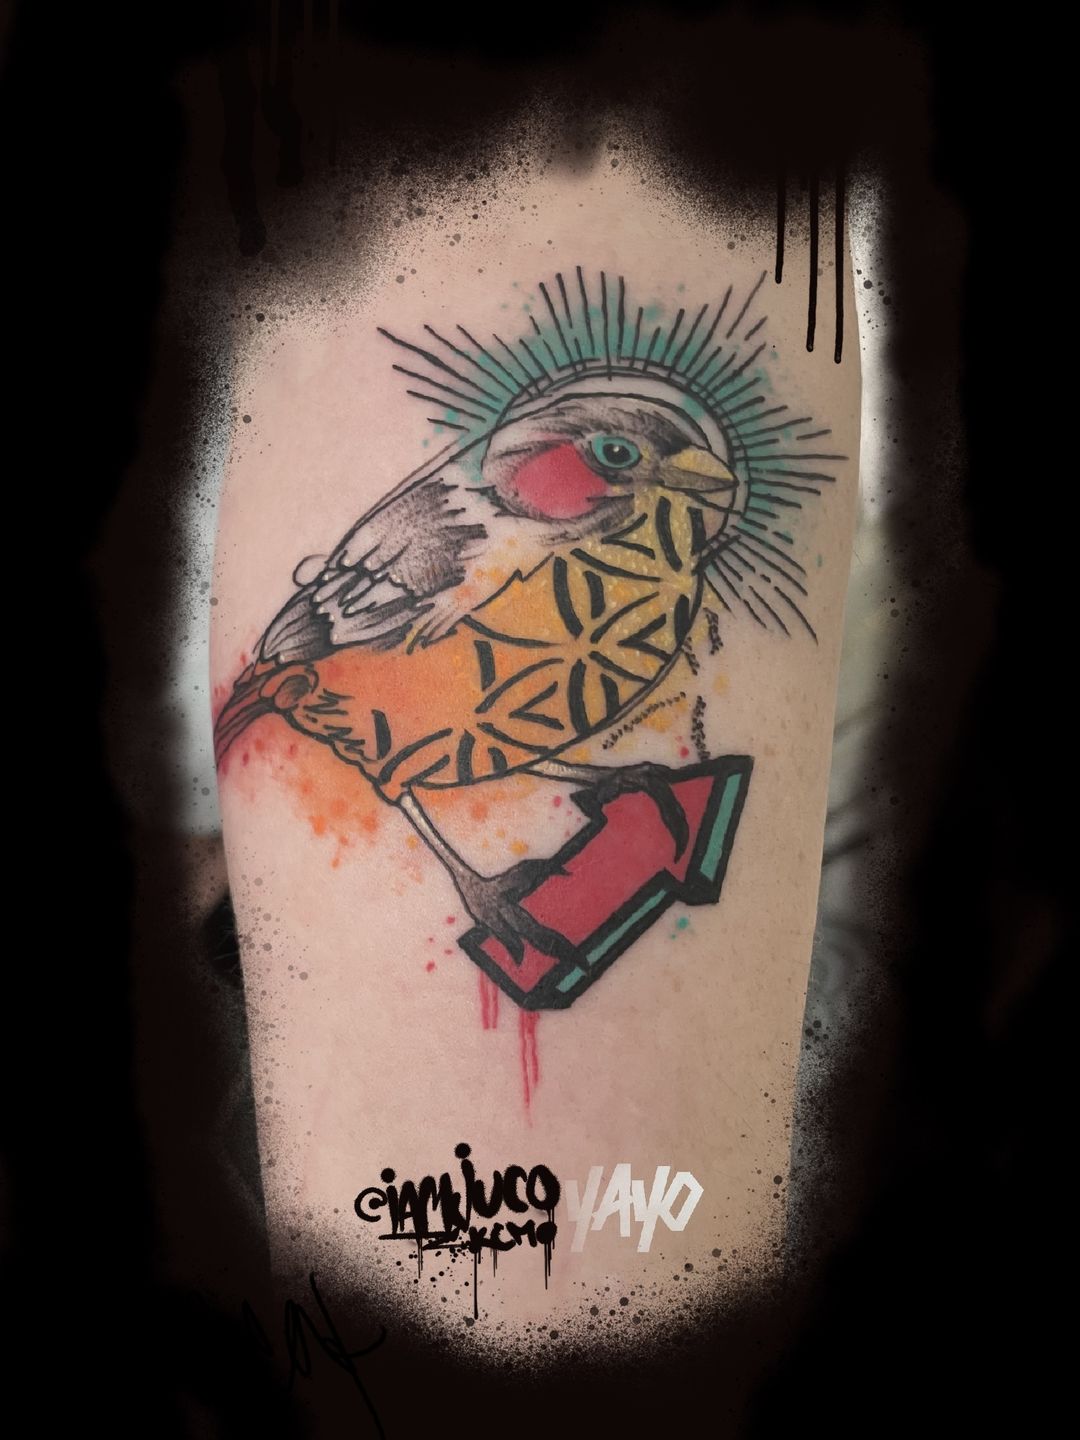 Tattoo uploaded by Bartt • #watercolor #watercolortattoo #parrot #cogs  #chest #colour #colourtattoo #nw1 #kentishtown #camdentowntattoo #london # tattoo #ink #ukink #inked #bartt ( appointment enquiries:  highonartstudio@gmail.com ) inst. @bartt_tattoo ...